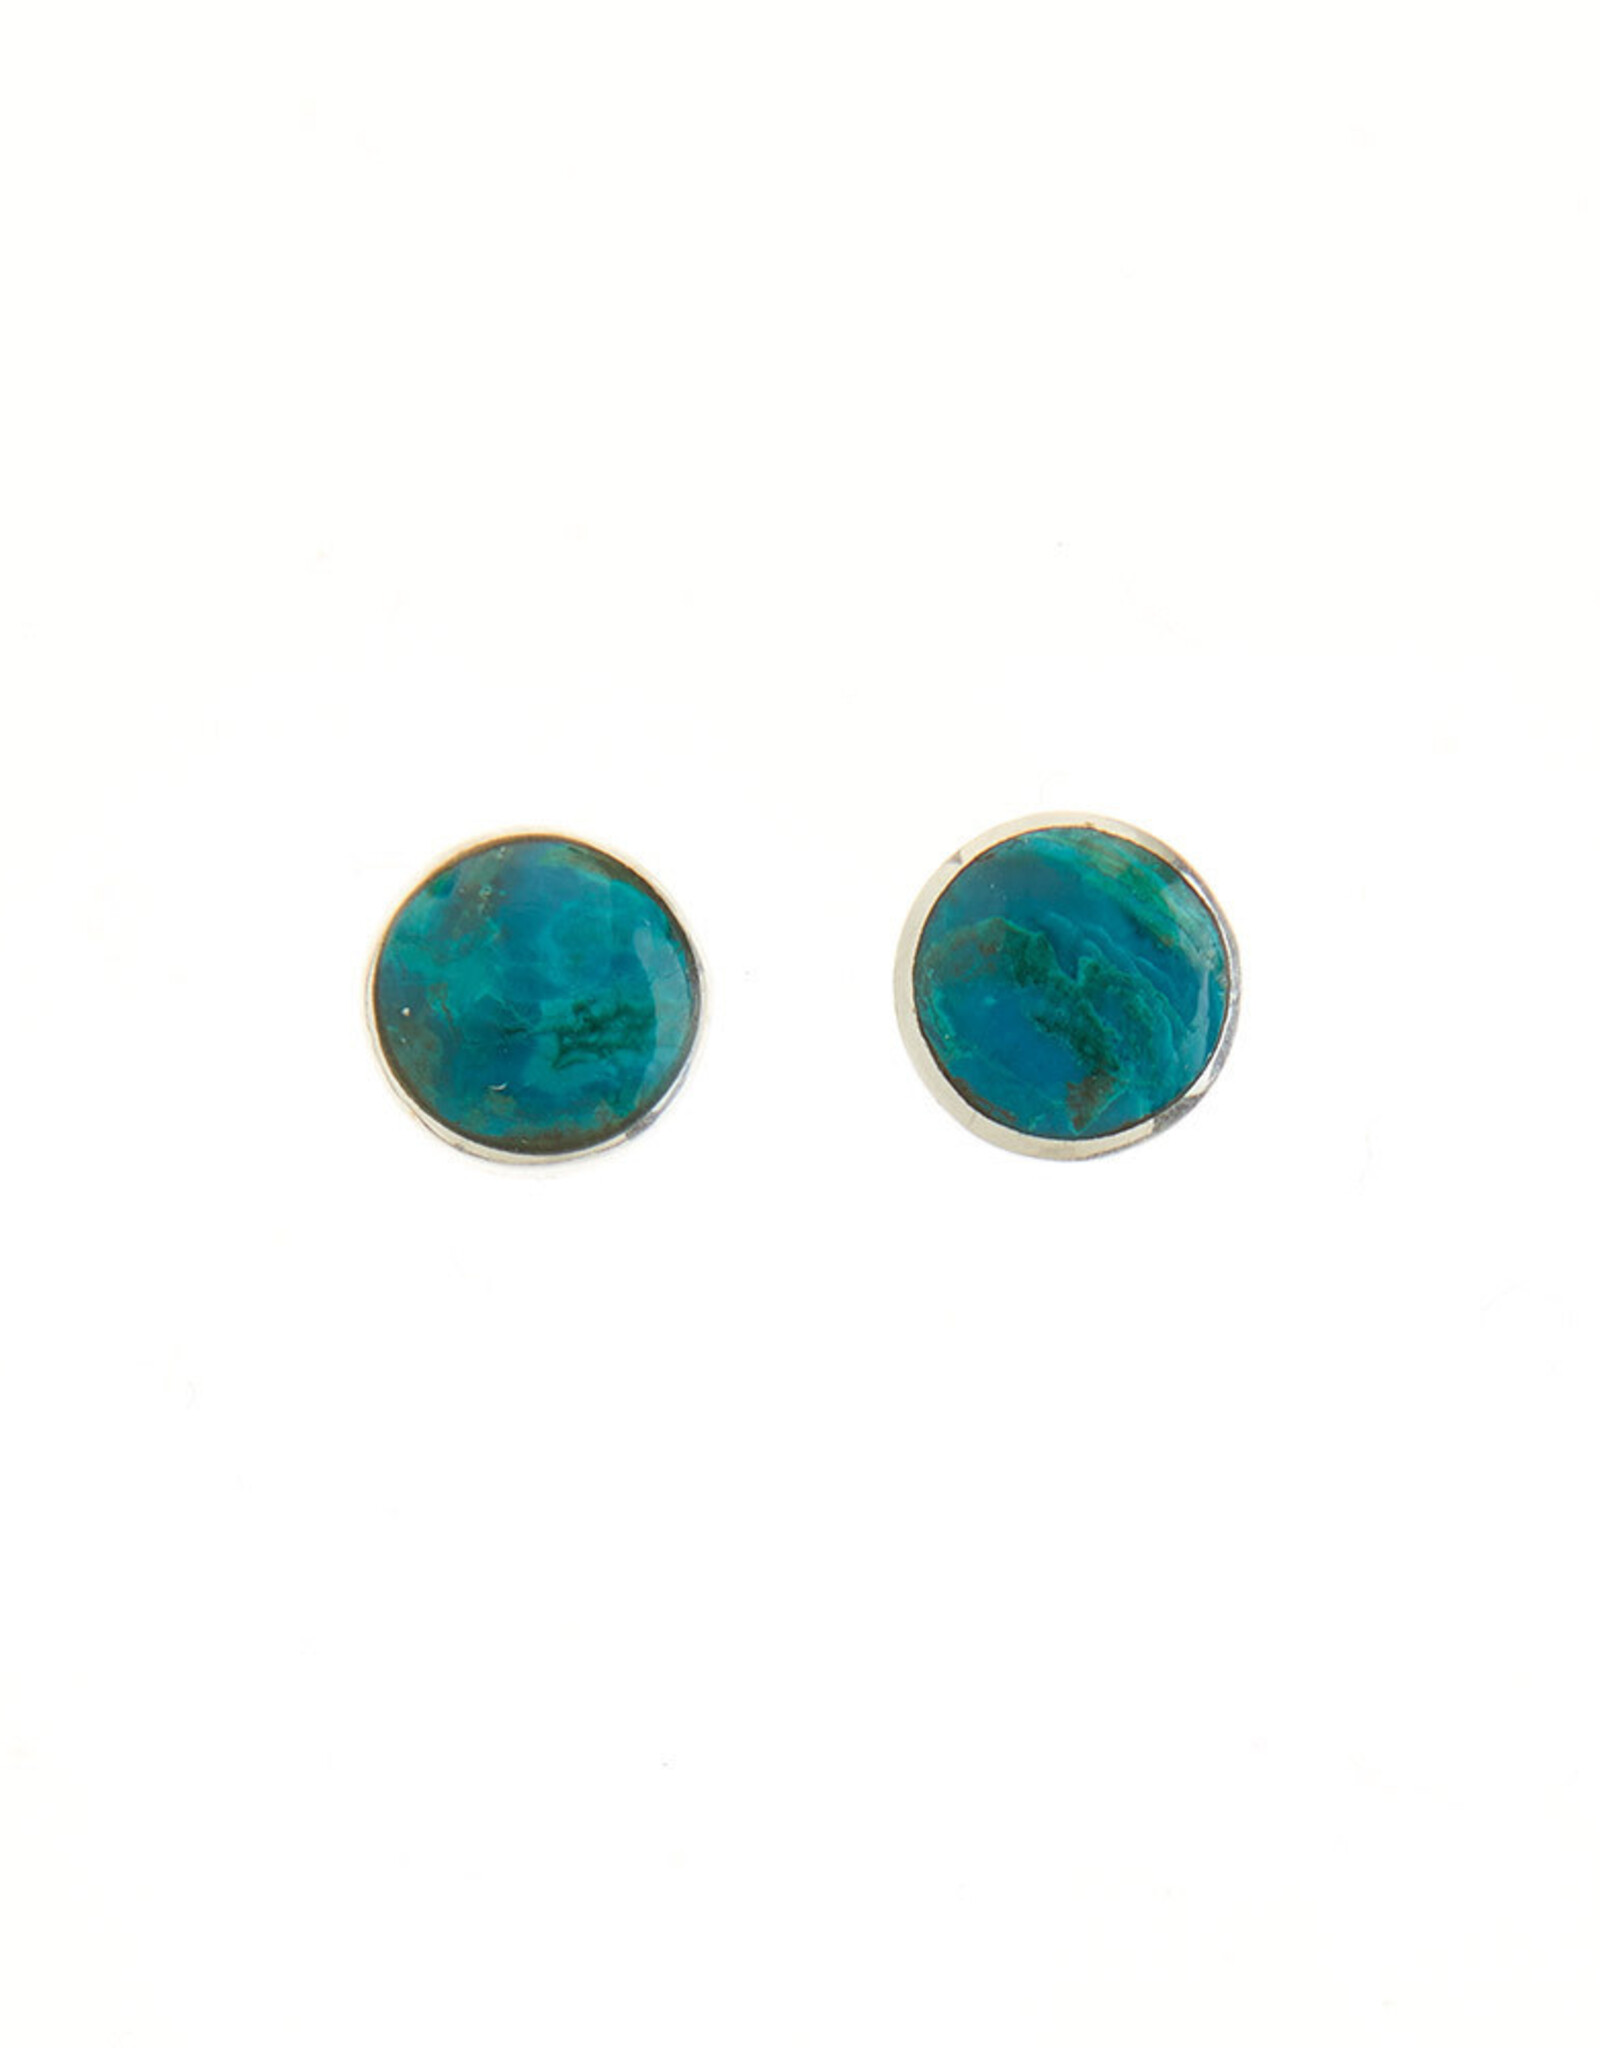 Peru Earrings Turquoise Posts - Peru